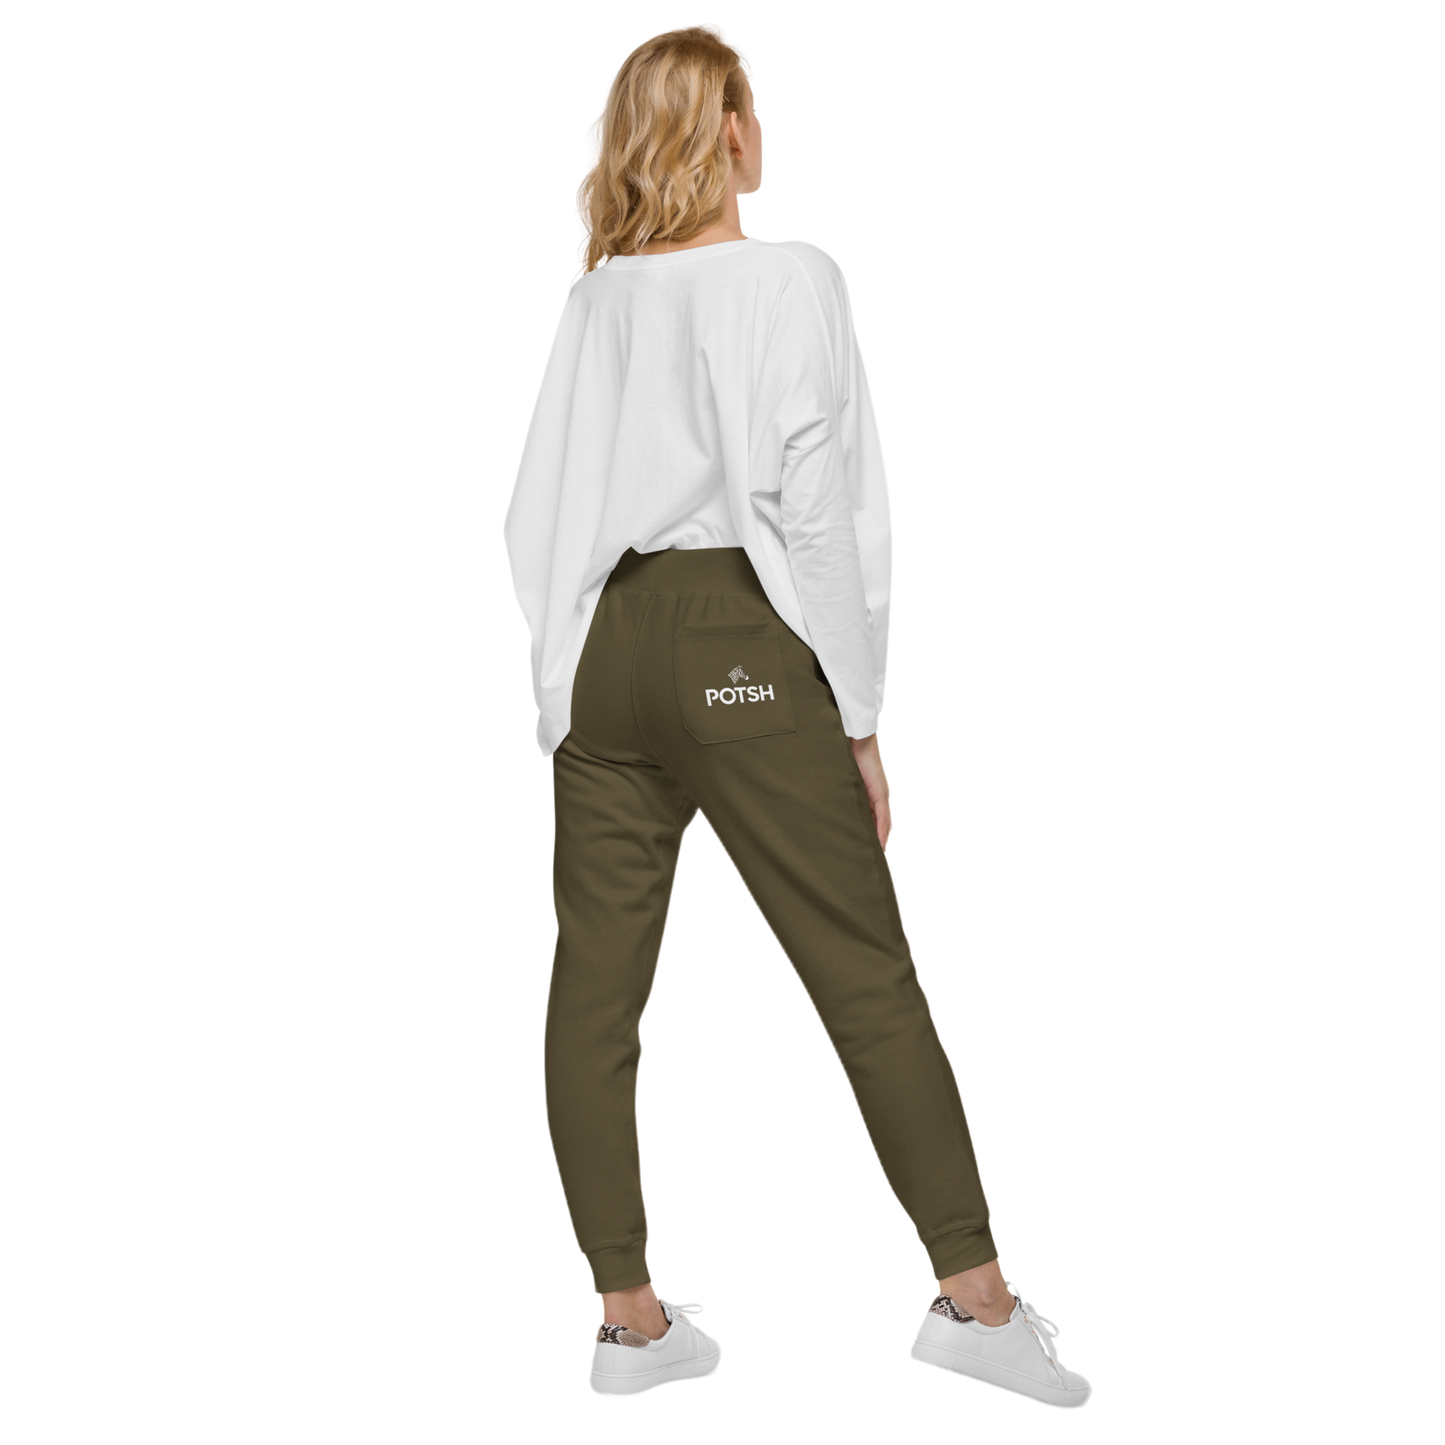 Women's POTSH Logo Military Green Lux Fleece Tracksuit